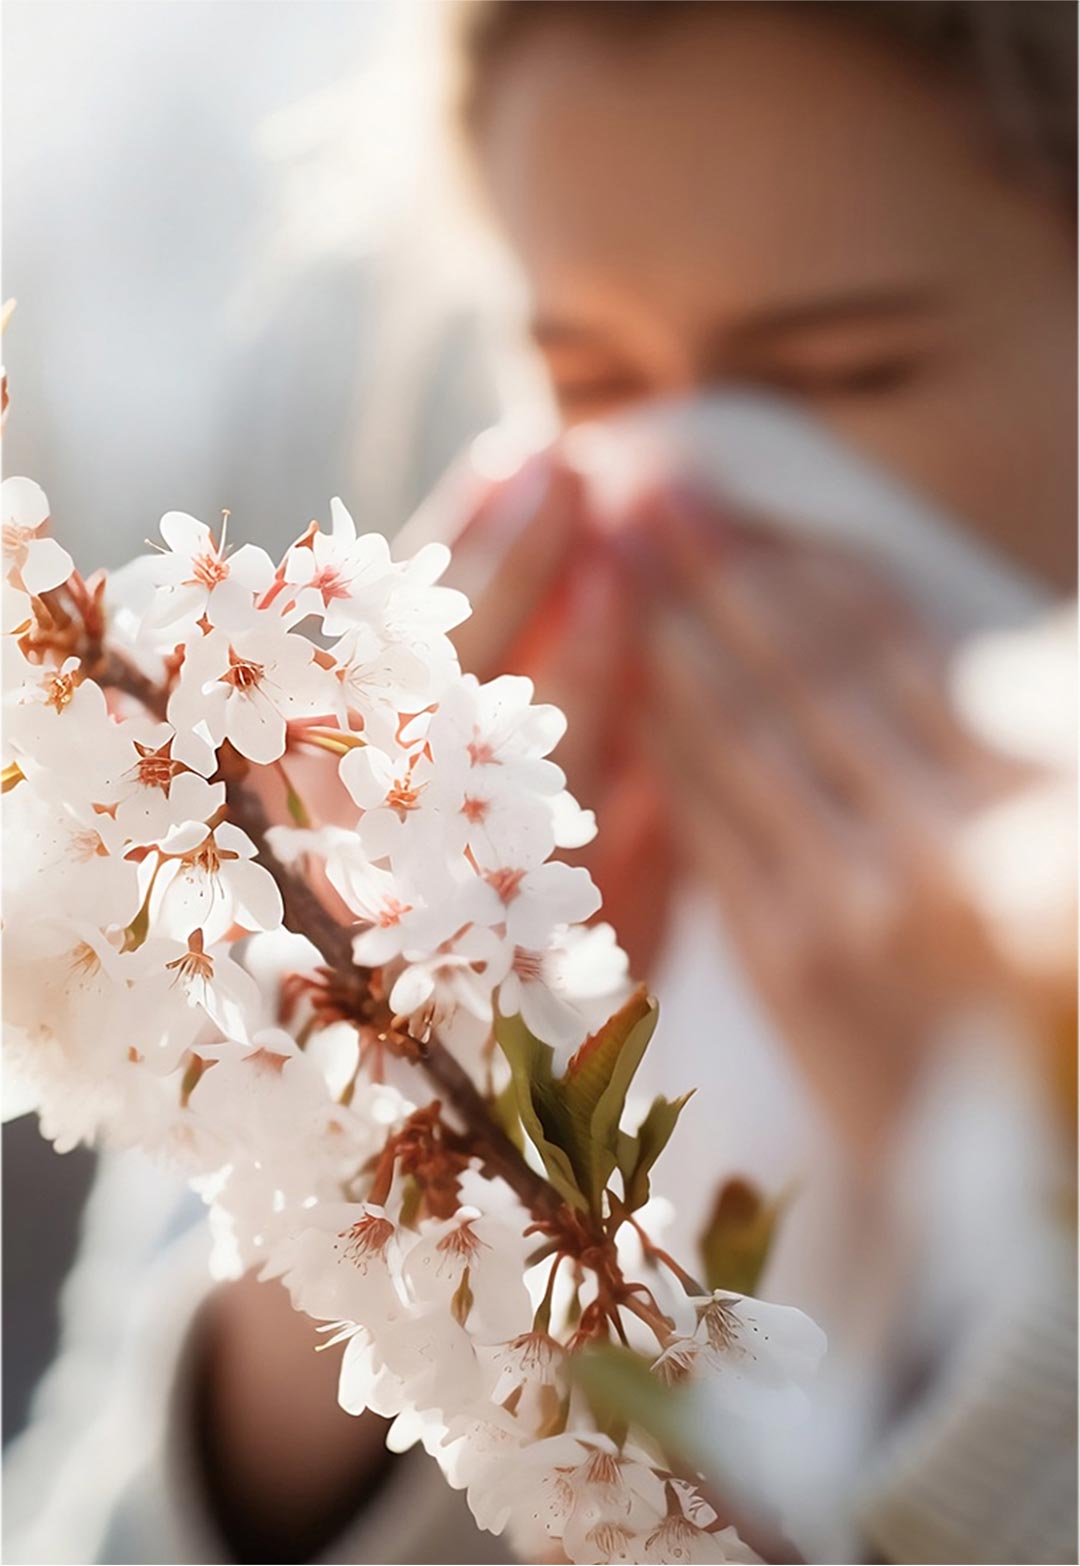 Allergie im Frühling